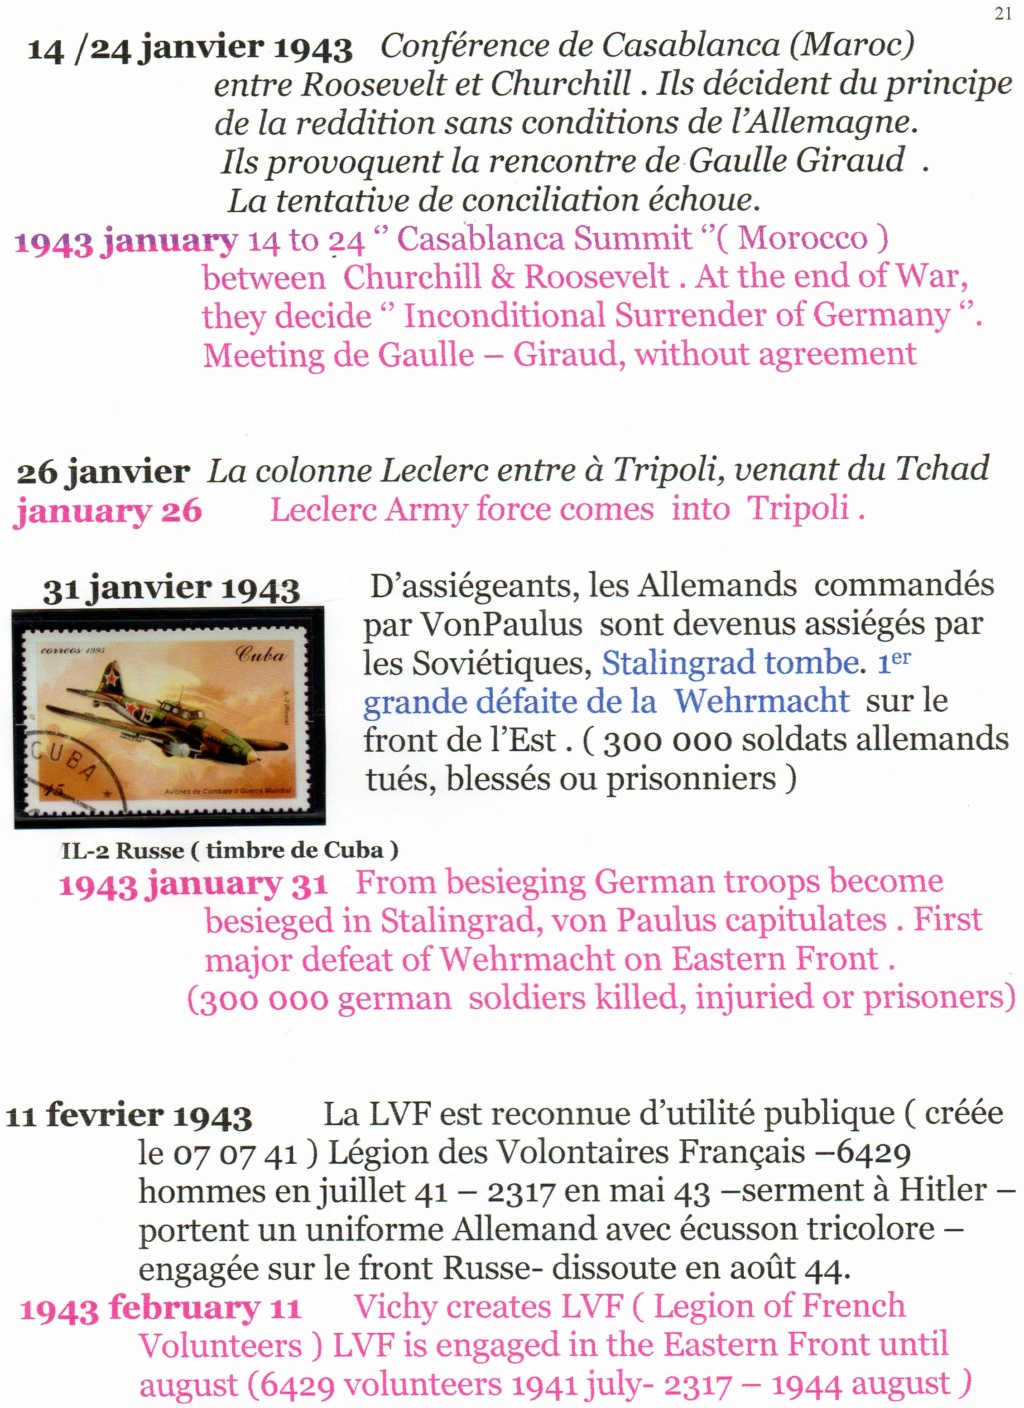 LIBERATION DE PUTANGES AOÛT 44 ET W.WAR II Europe only - Page 2 Page_215